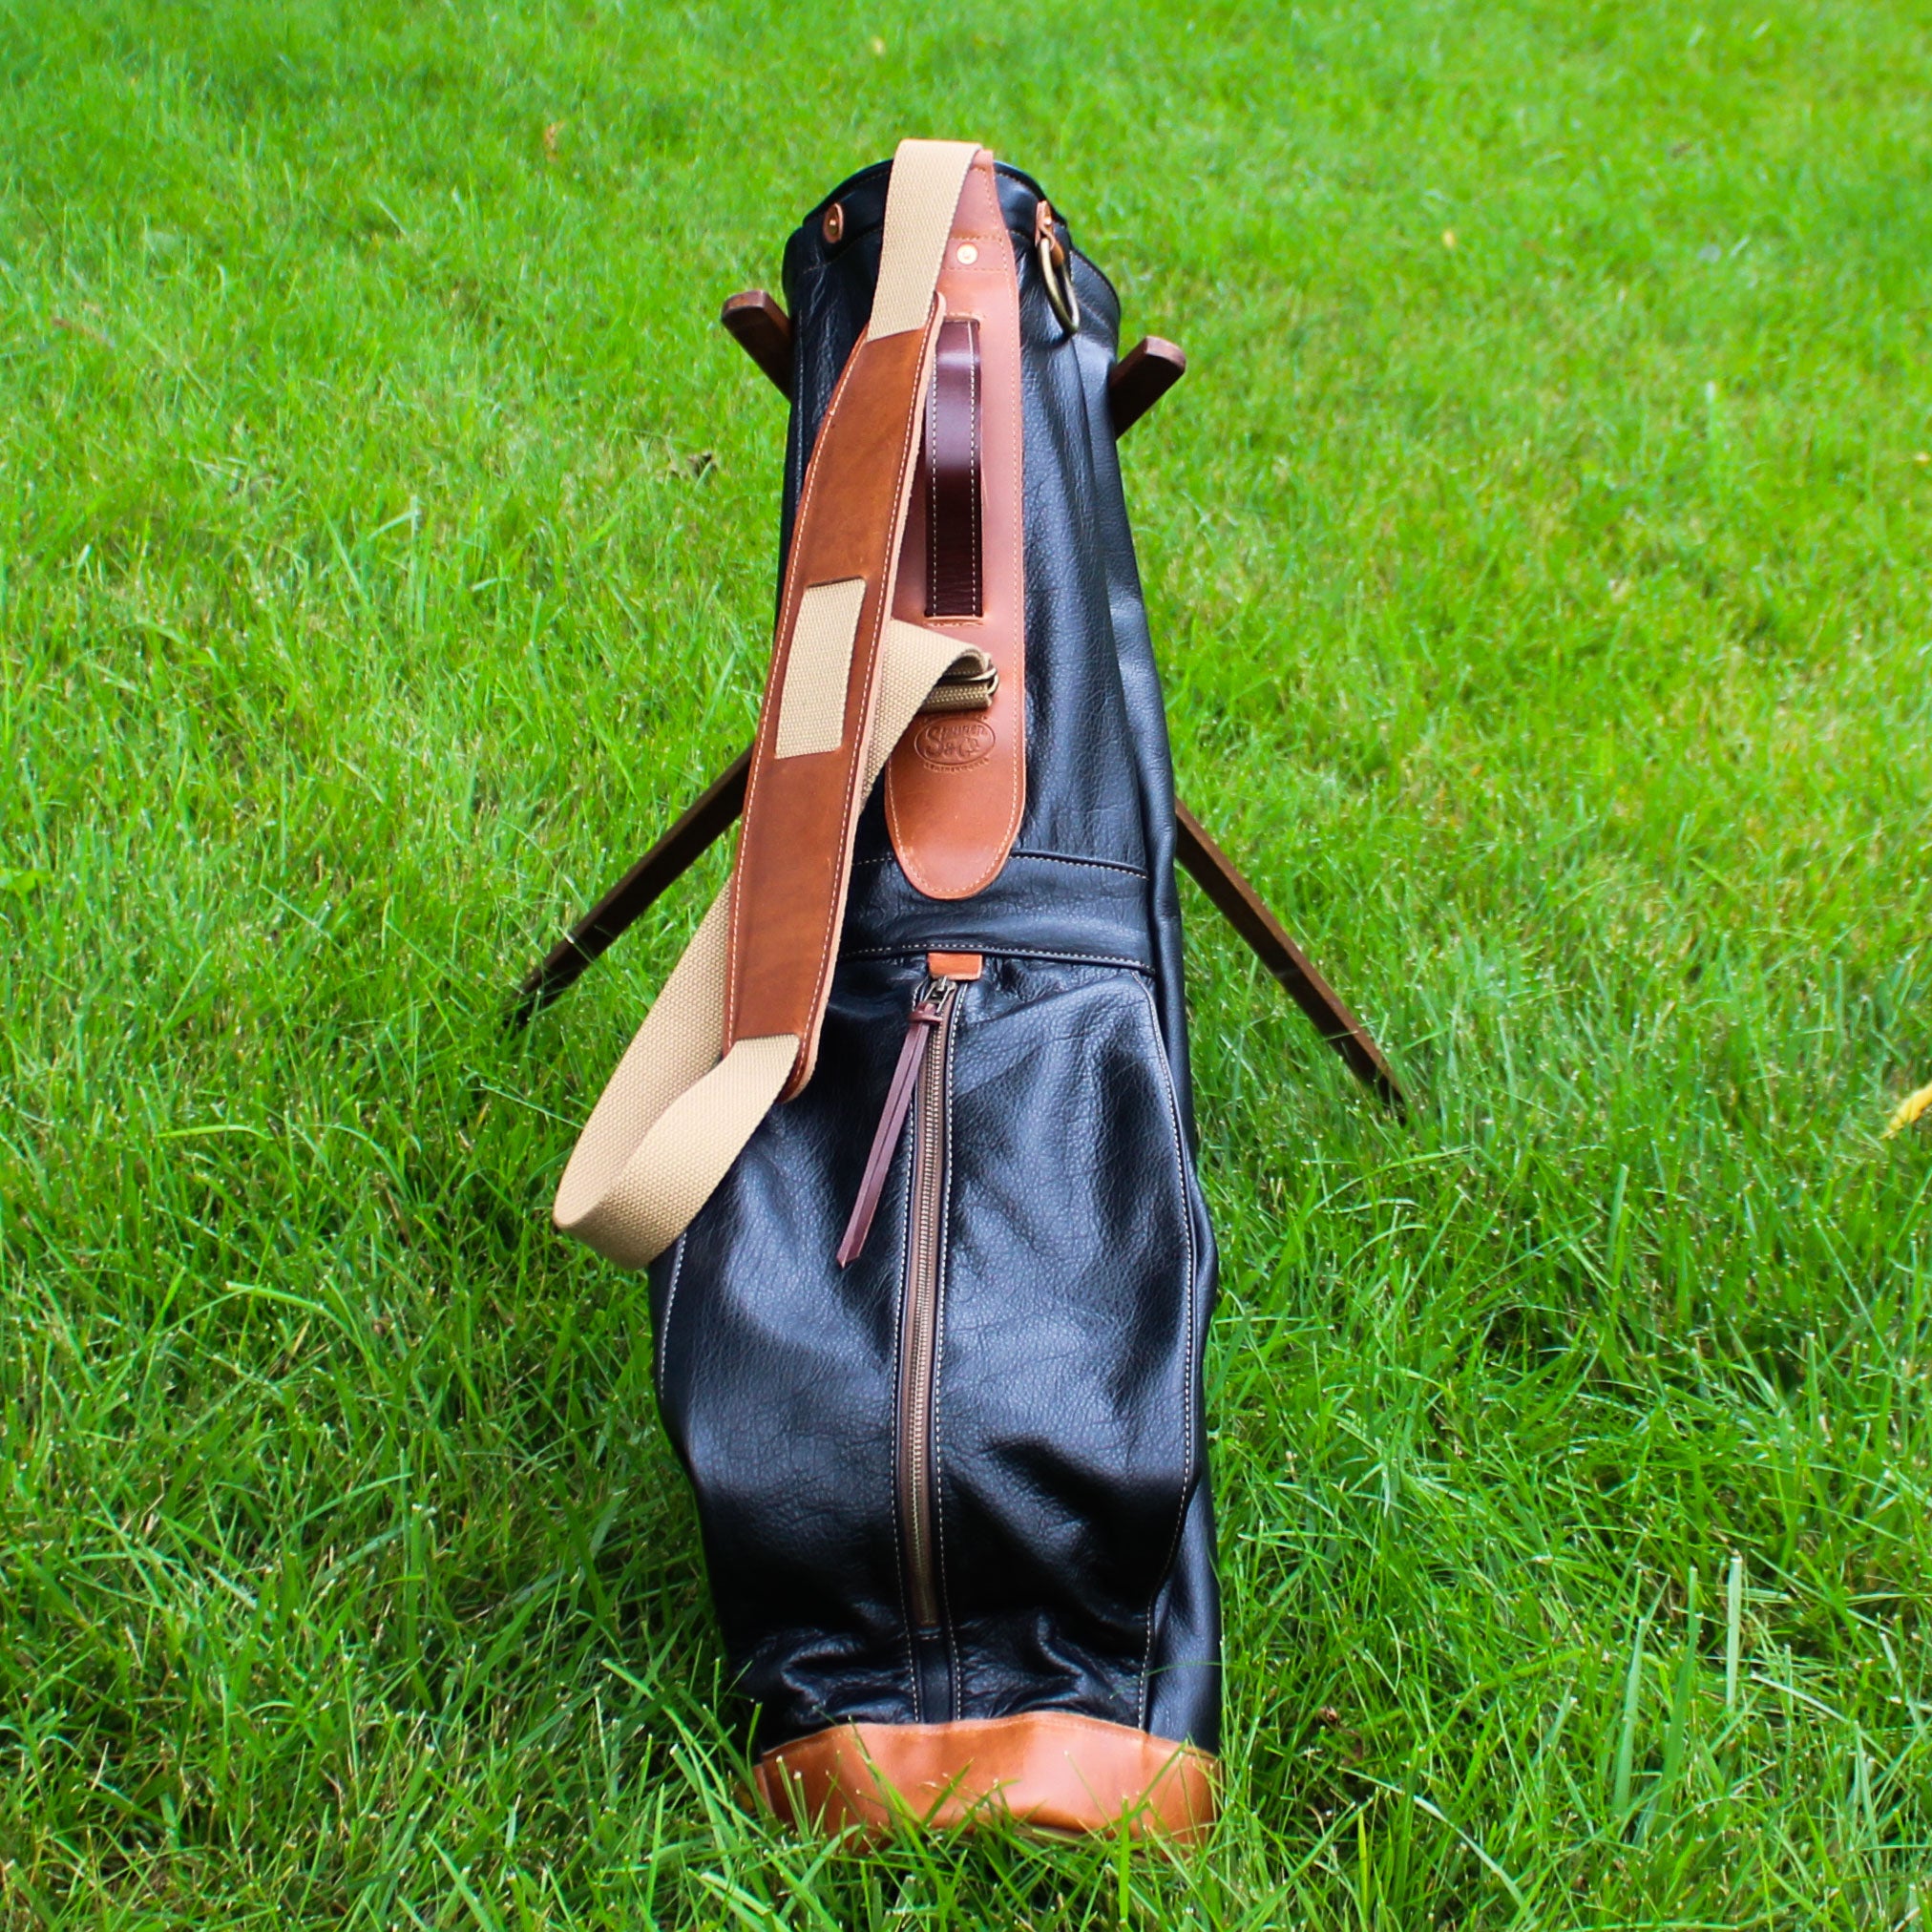 Design Your Own Bag: You For Mifland – Mifland : A Design Company